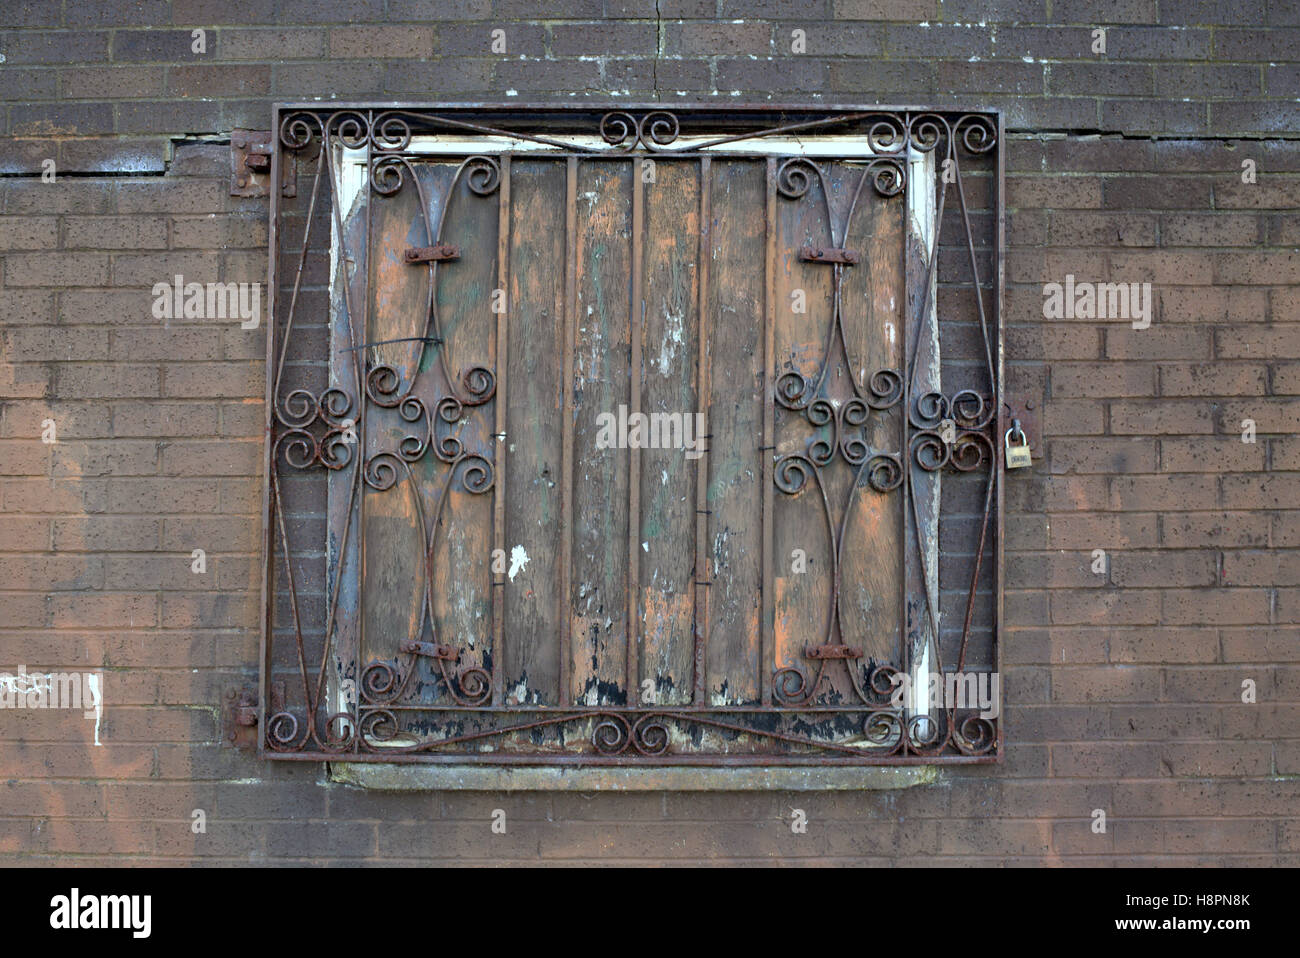 Barras de hierro forjado ventana bloqueada rojo ladrillo barbacoa oxidada Foto de stock